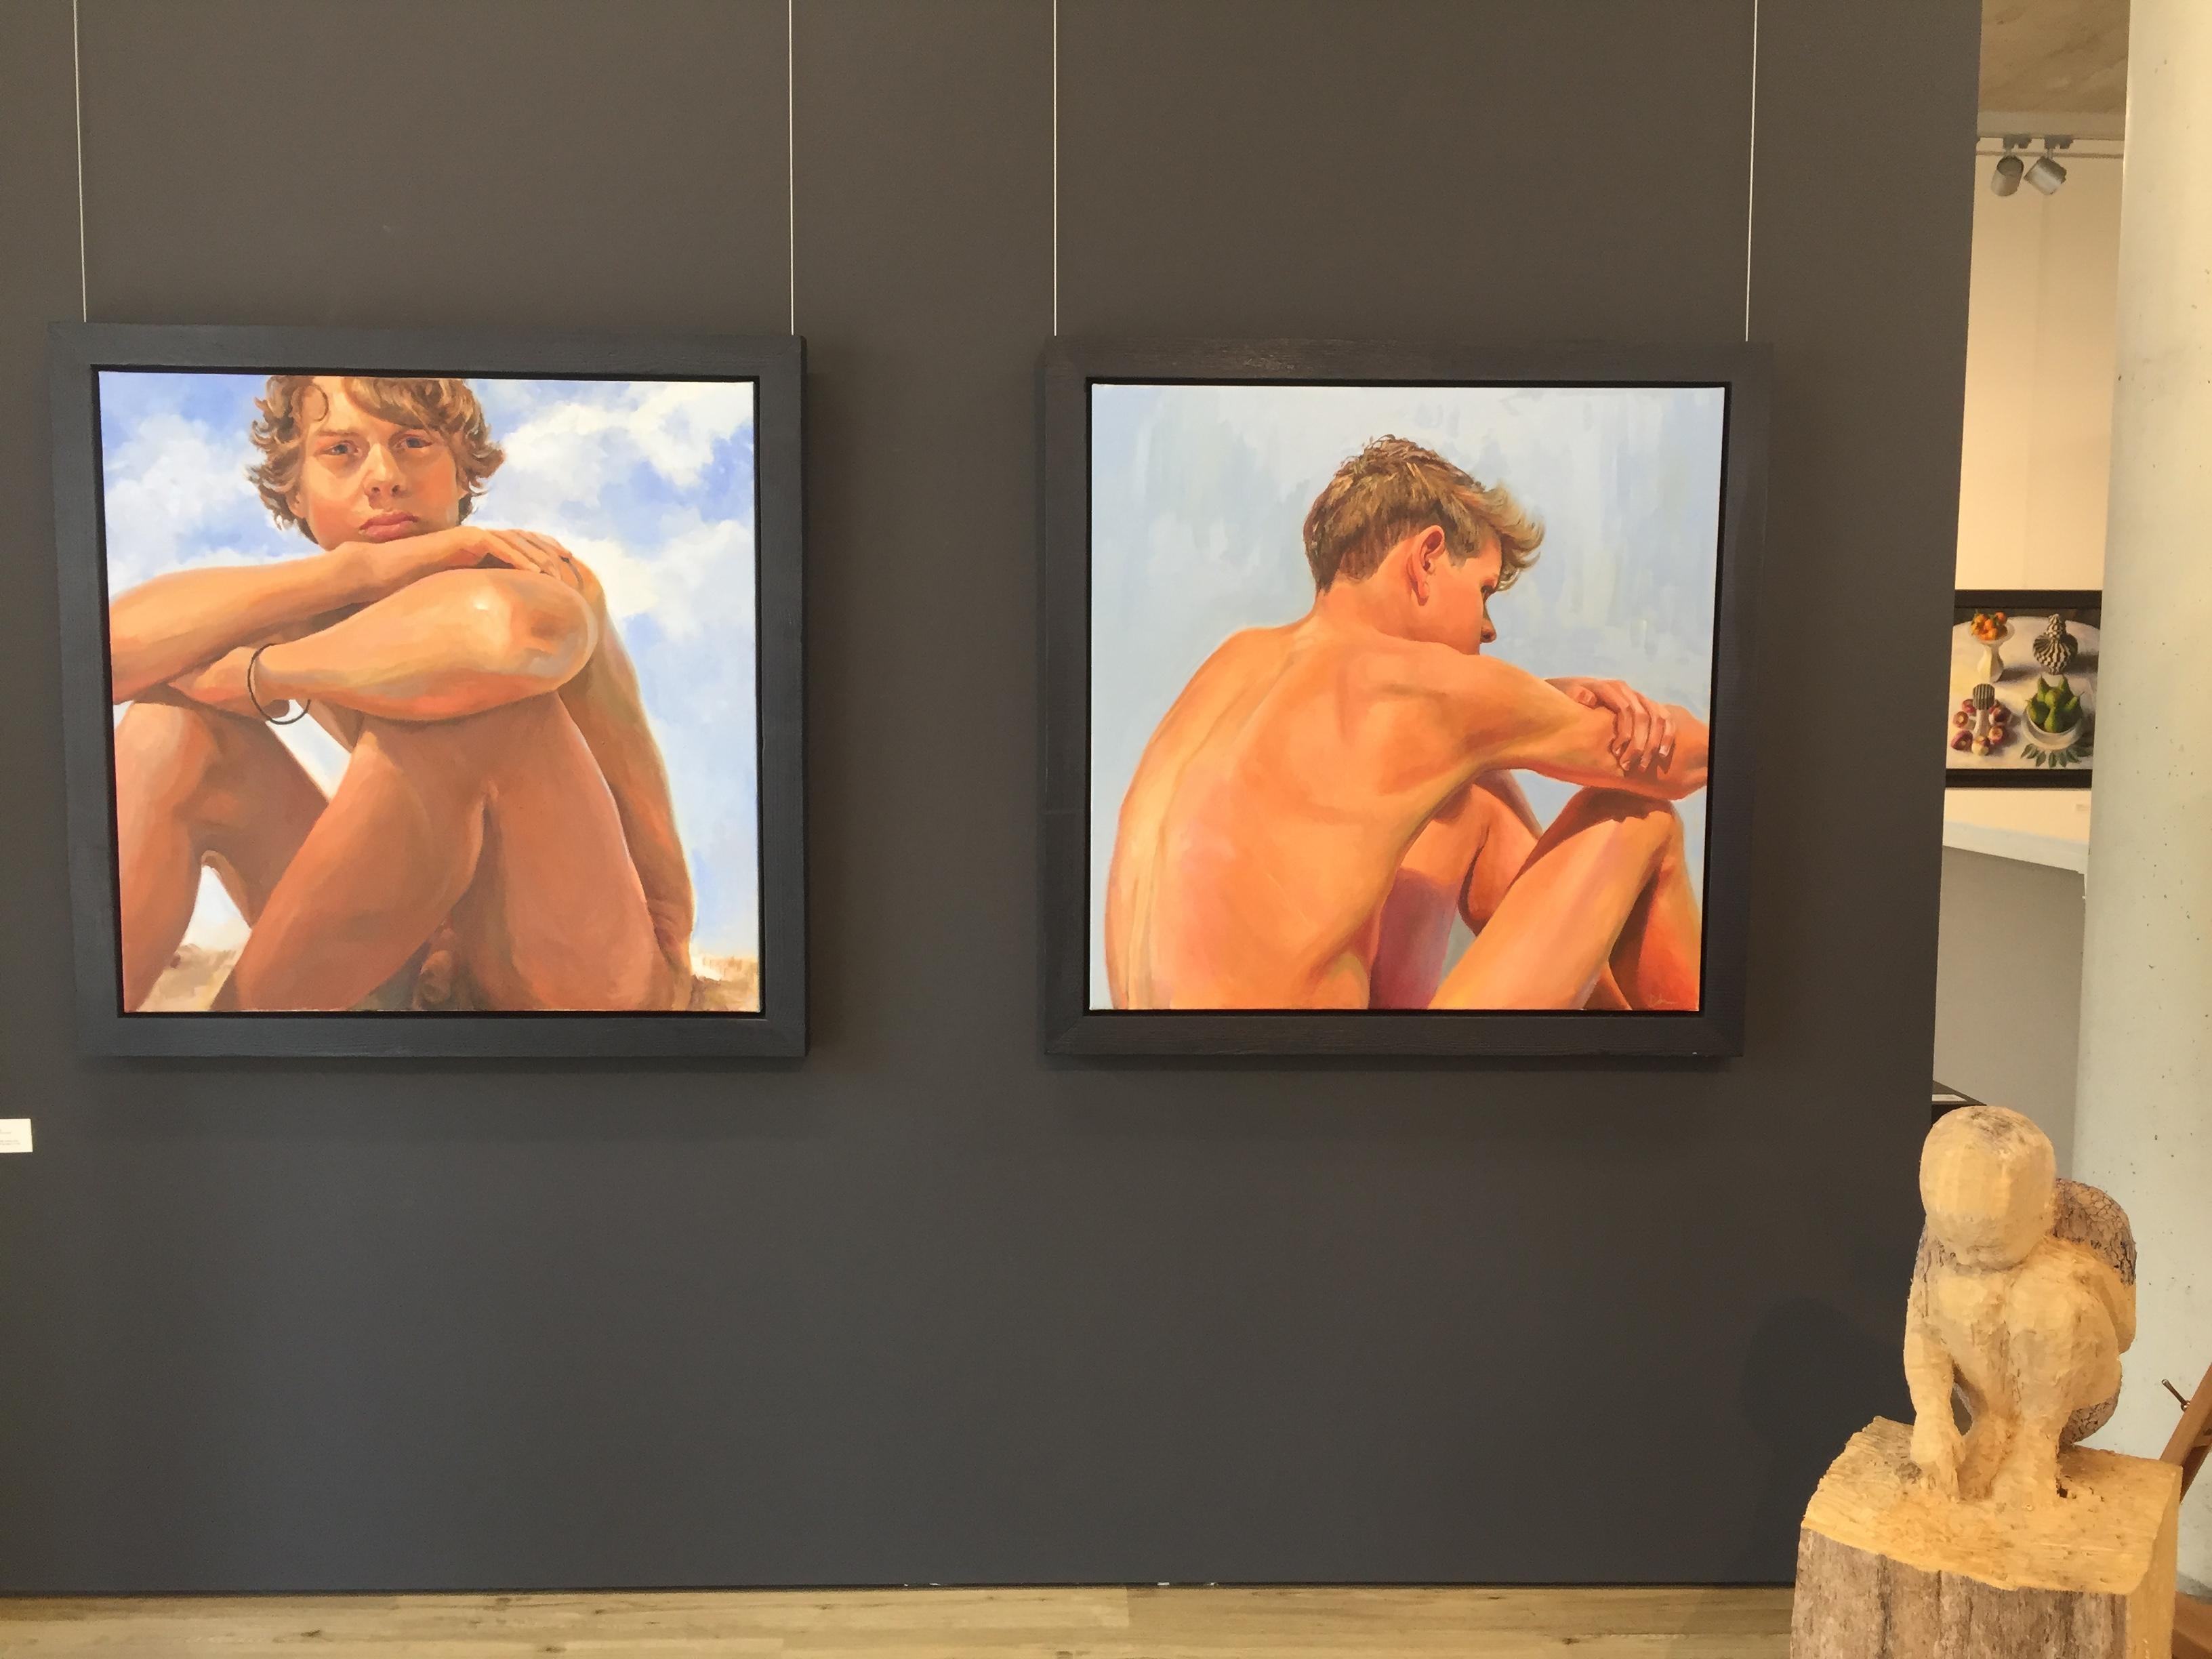 Boys keep Swinging III-21st Century Painting of a sitting nude boy - Brown Figurative Painting by David van der Linden